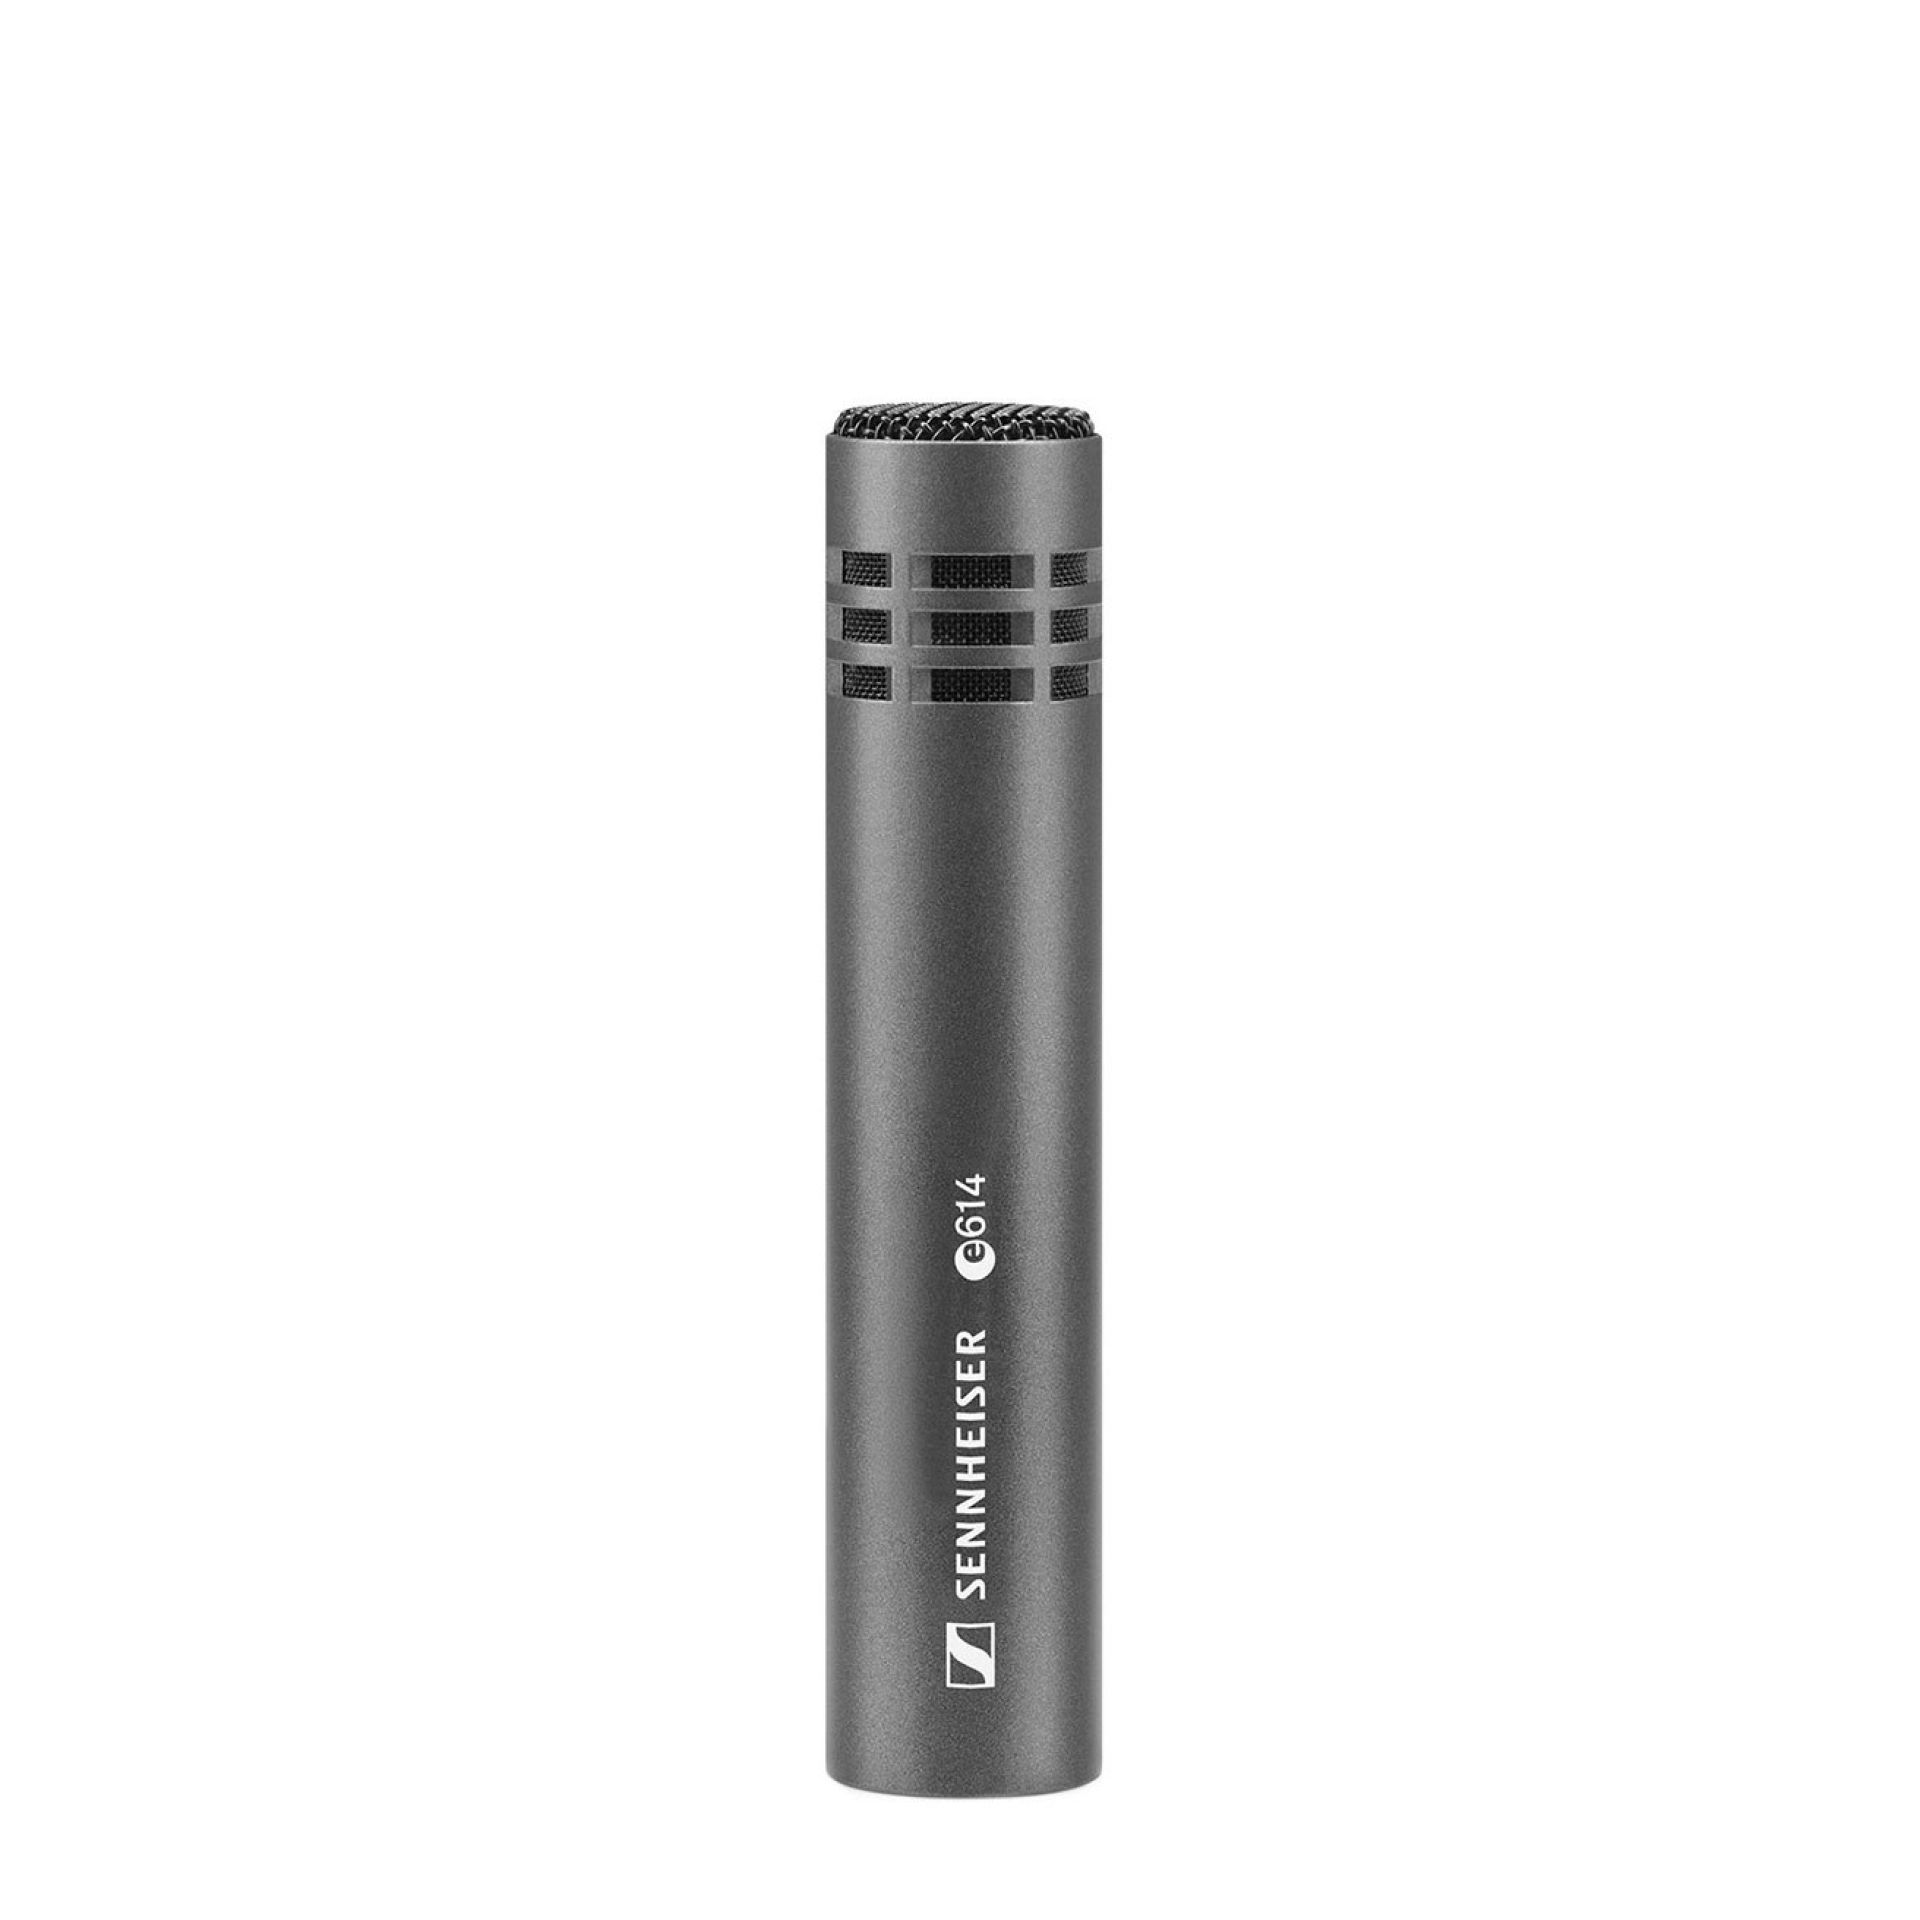 Sennheiser e614 Super-cardioid electret condenser microphone